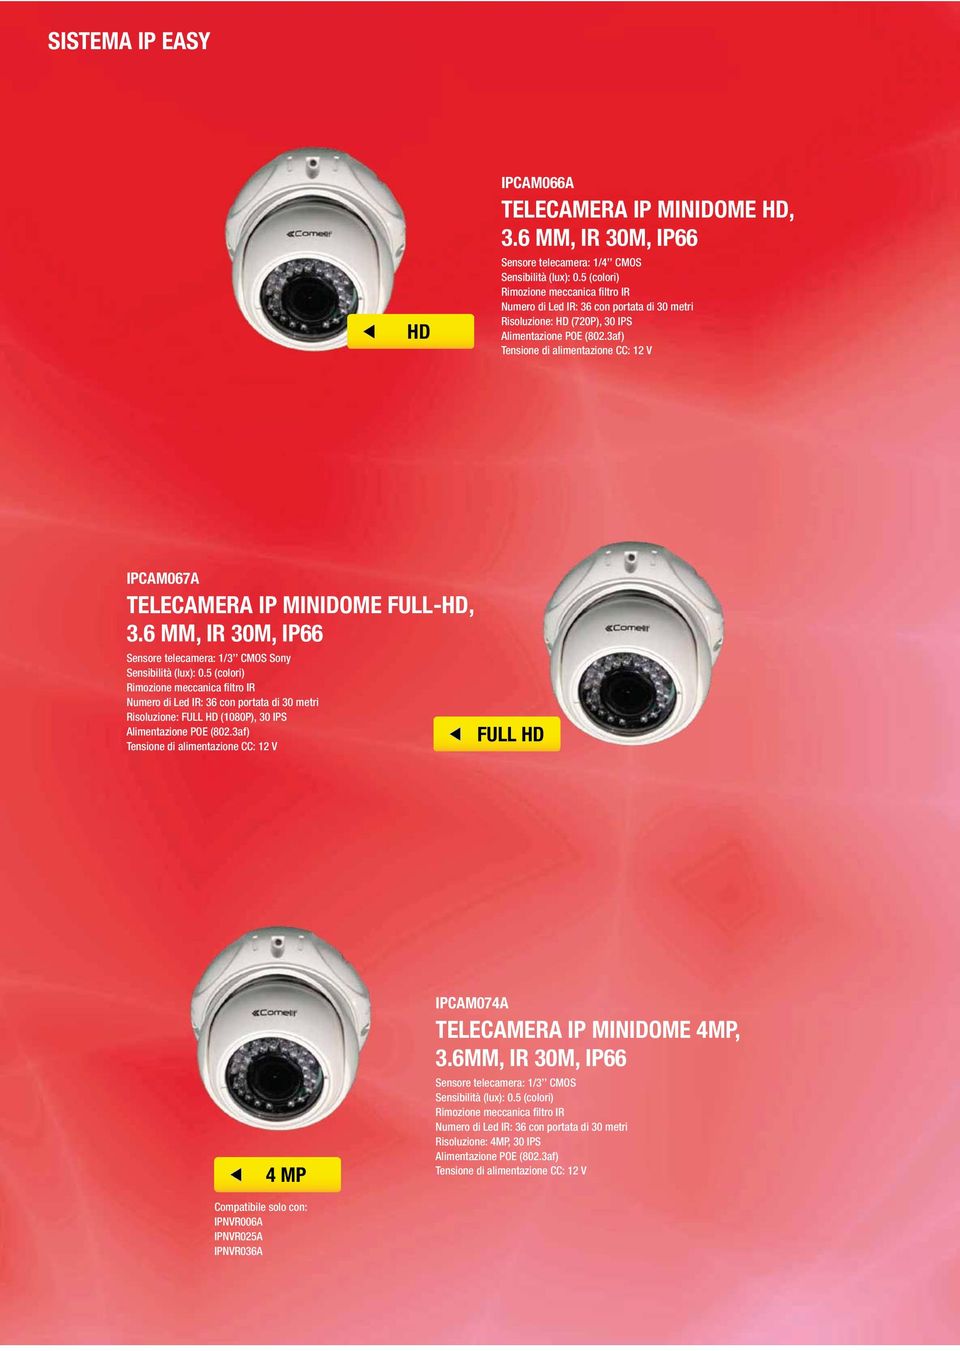 6 MM, IR 30M, IP66 Sensore telecamera: 1/3 CMOS Sony Sensibilità (lux): 0.